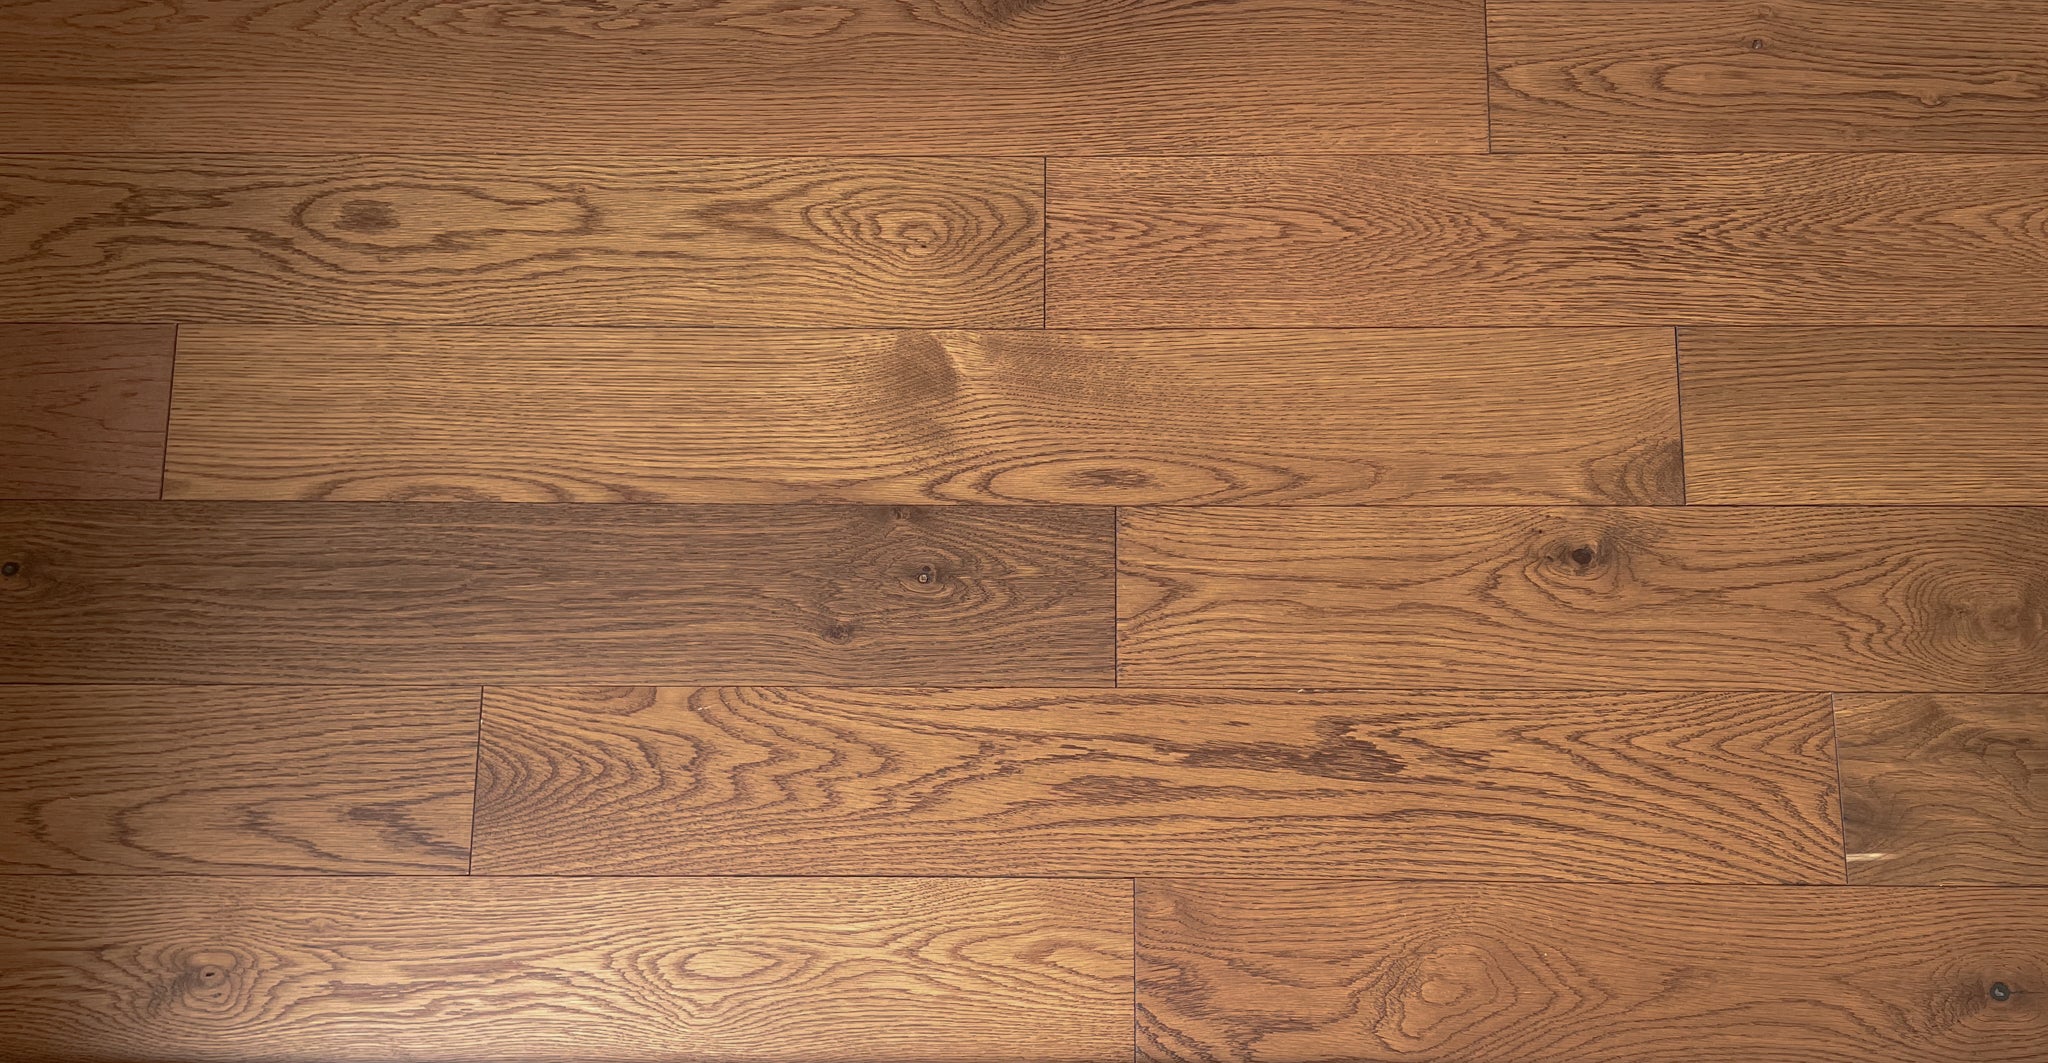 2 1/4 x 3/4 Solid Oak Carmine Stain Prefinished Hardwood Flooring